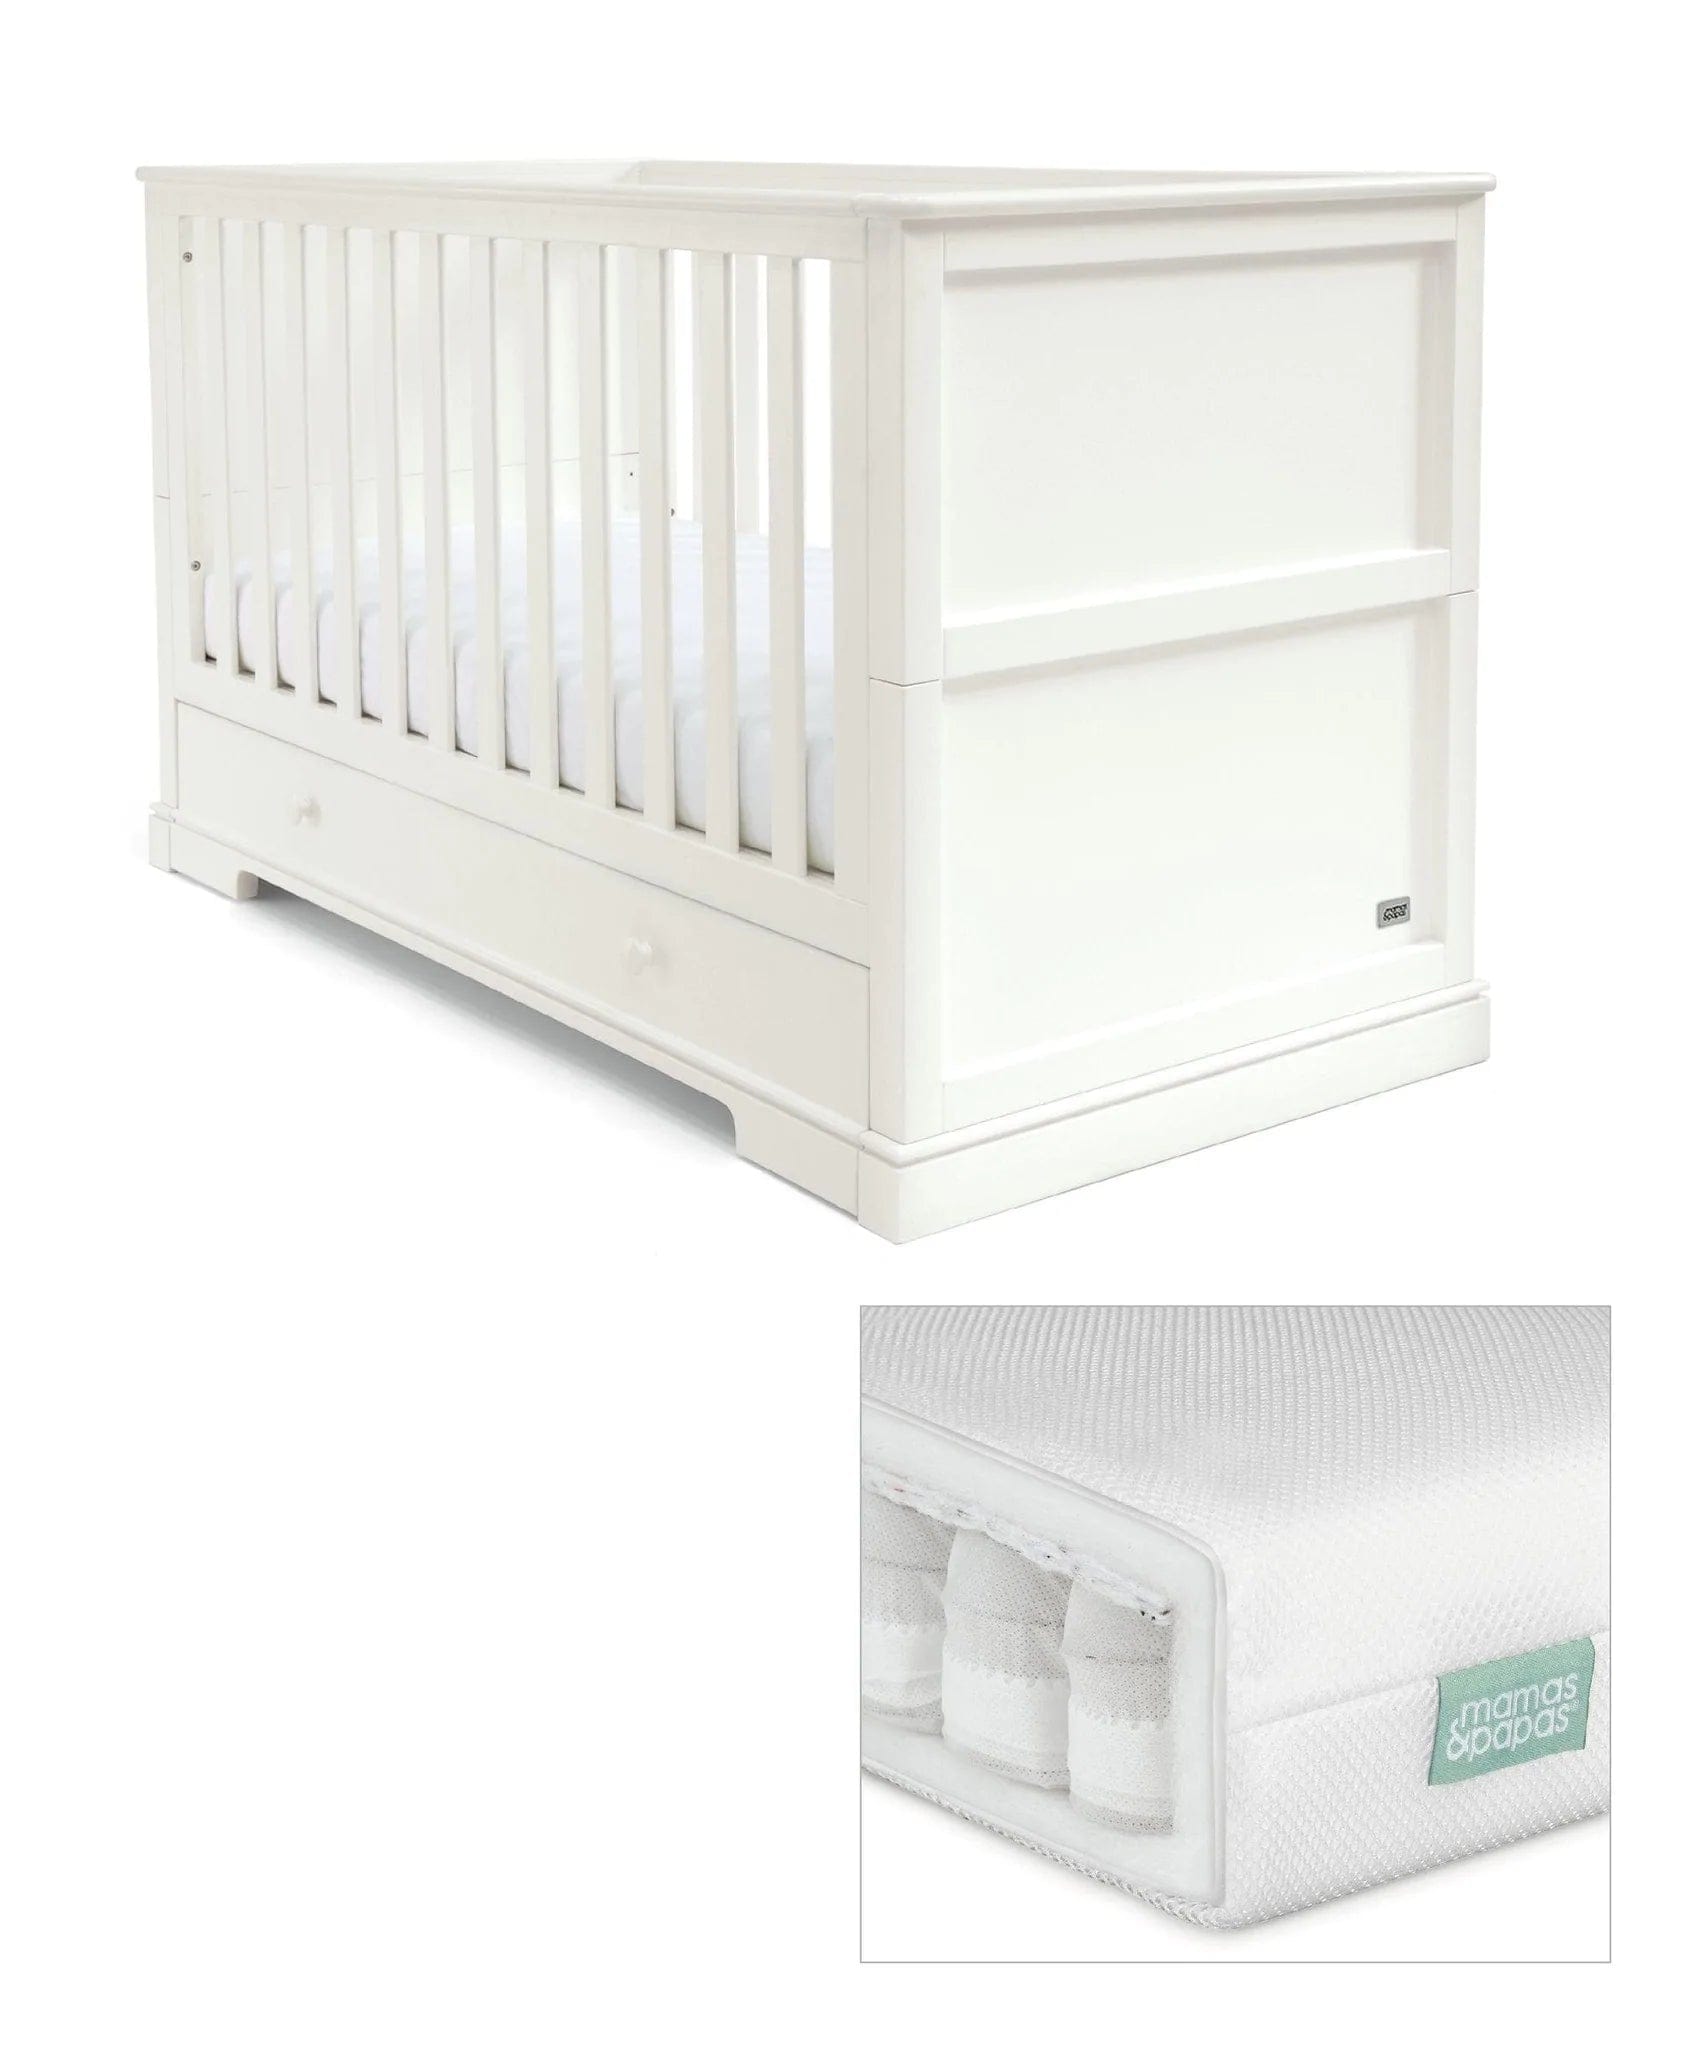 Mamas & Papas Nursery Furniture Set Cot Bed with Mattress Mamas & Papas 'Oxford' Range White